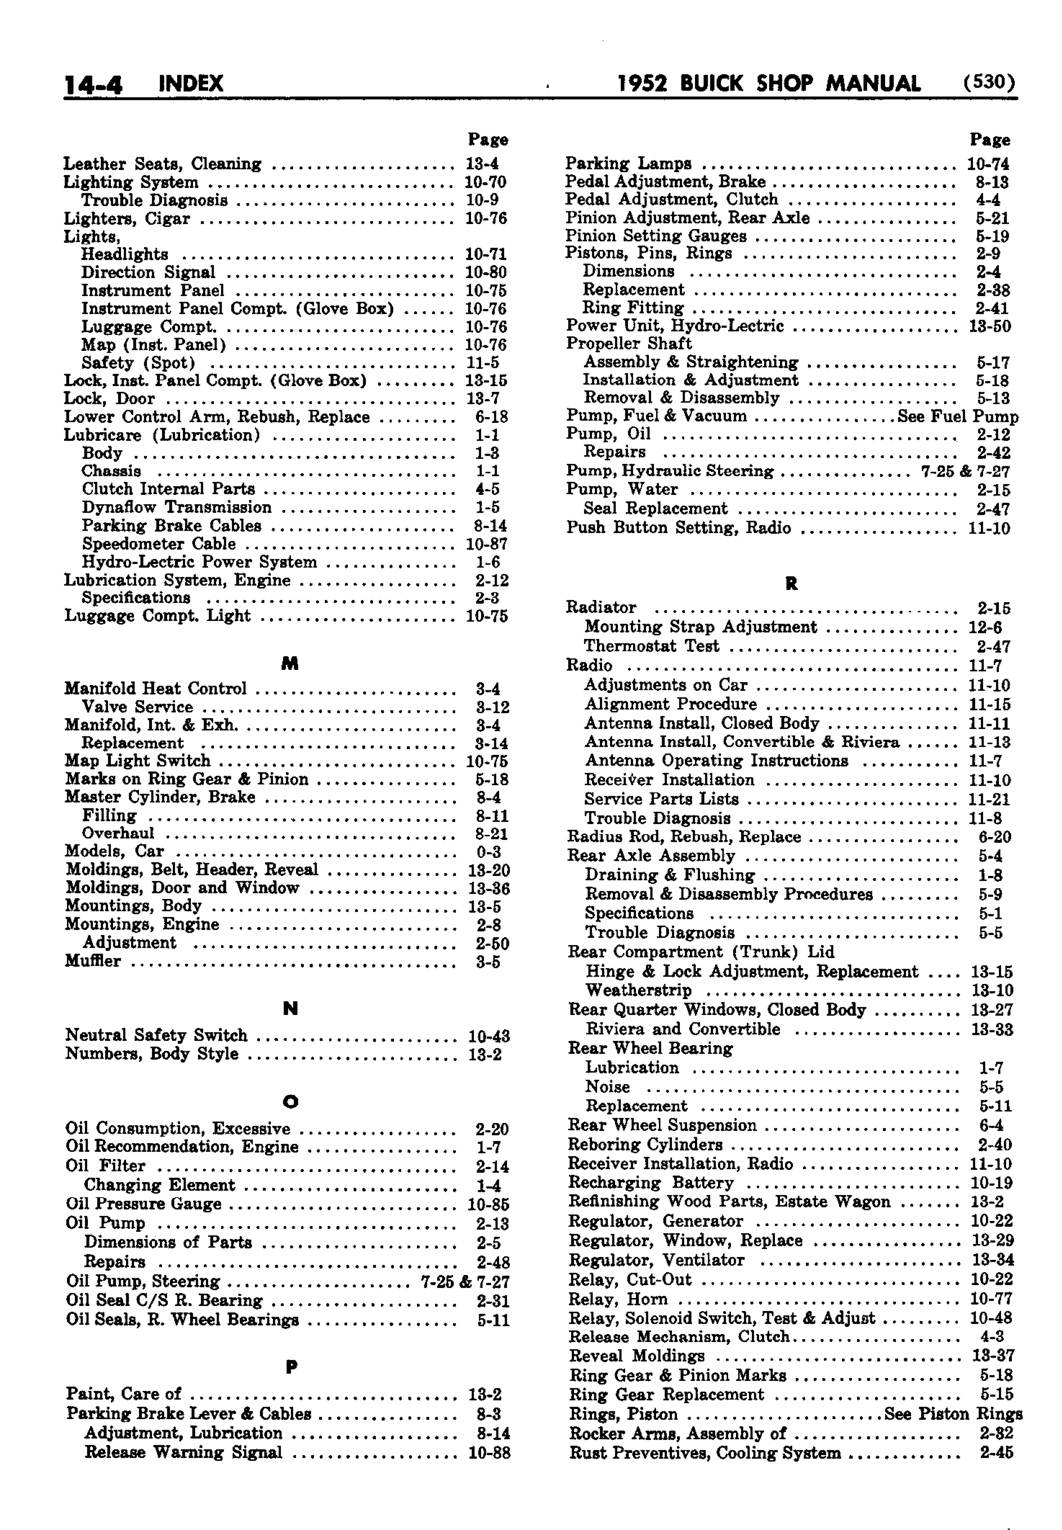 n_15 1952 Buick Shop Manual - Index-004-004.jpg